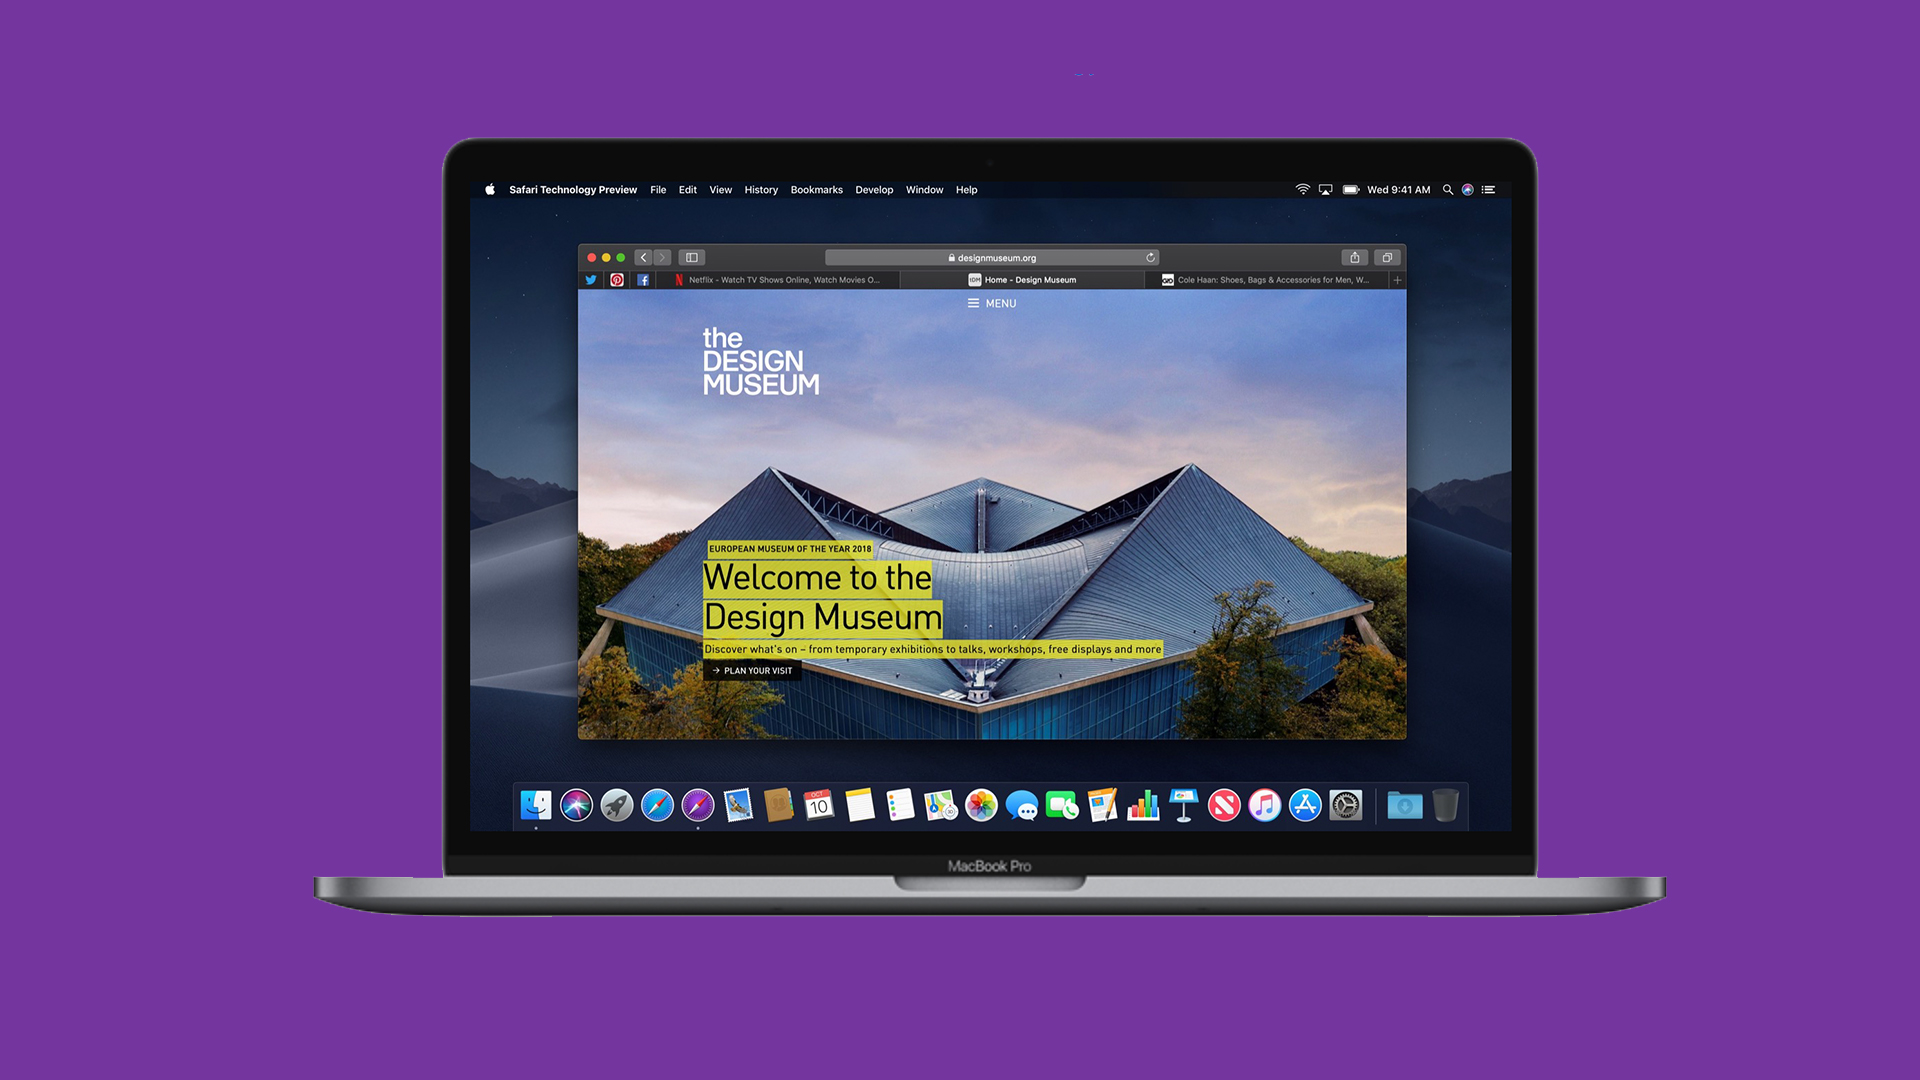 safari upgrade for macbook pro